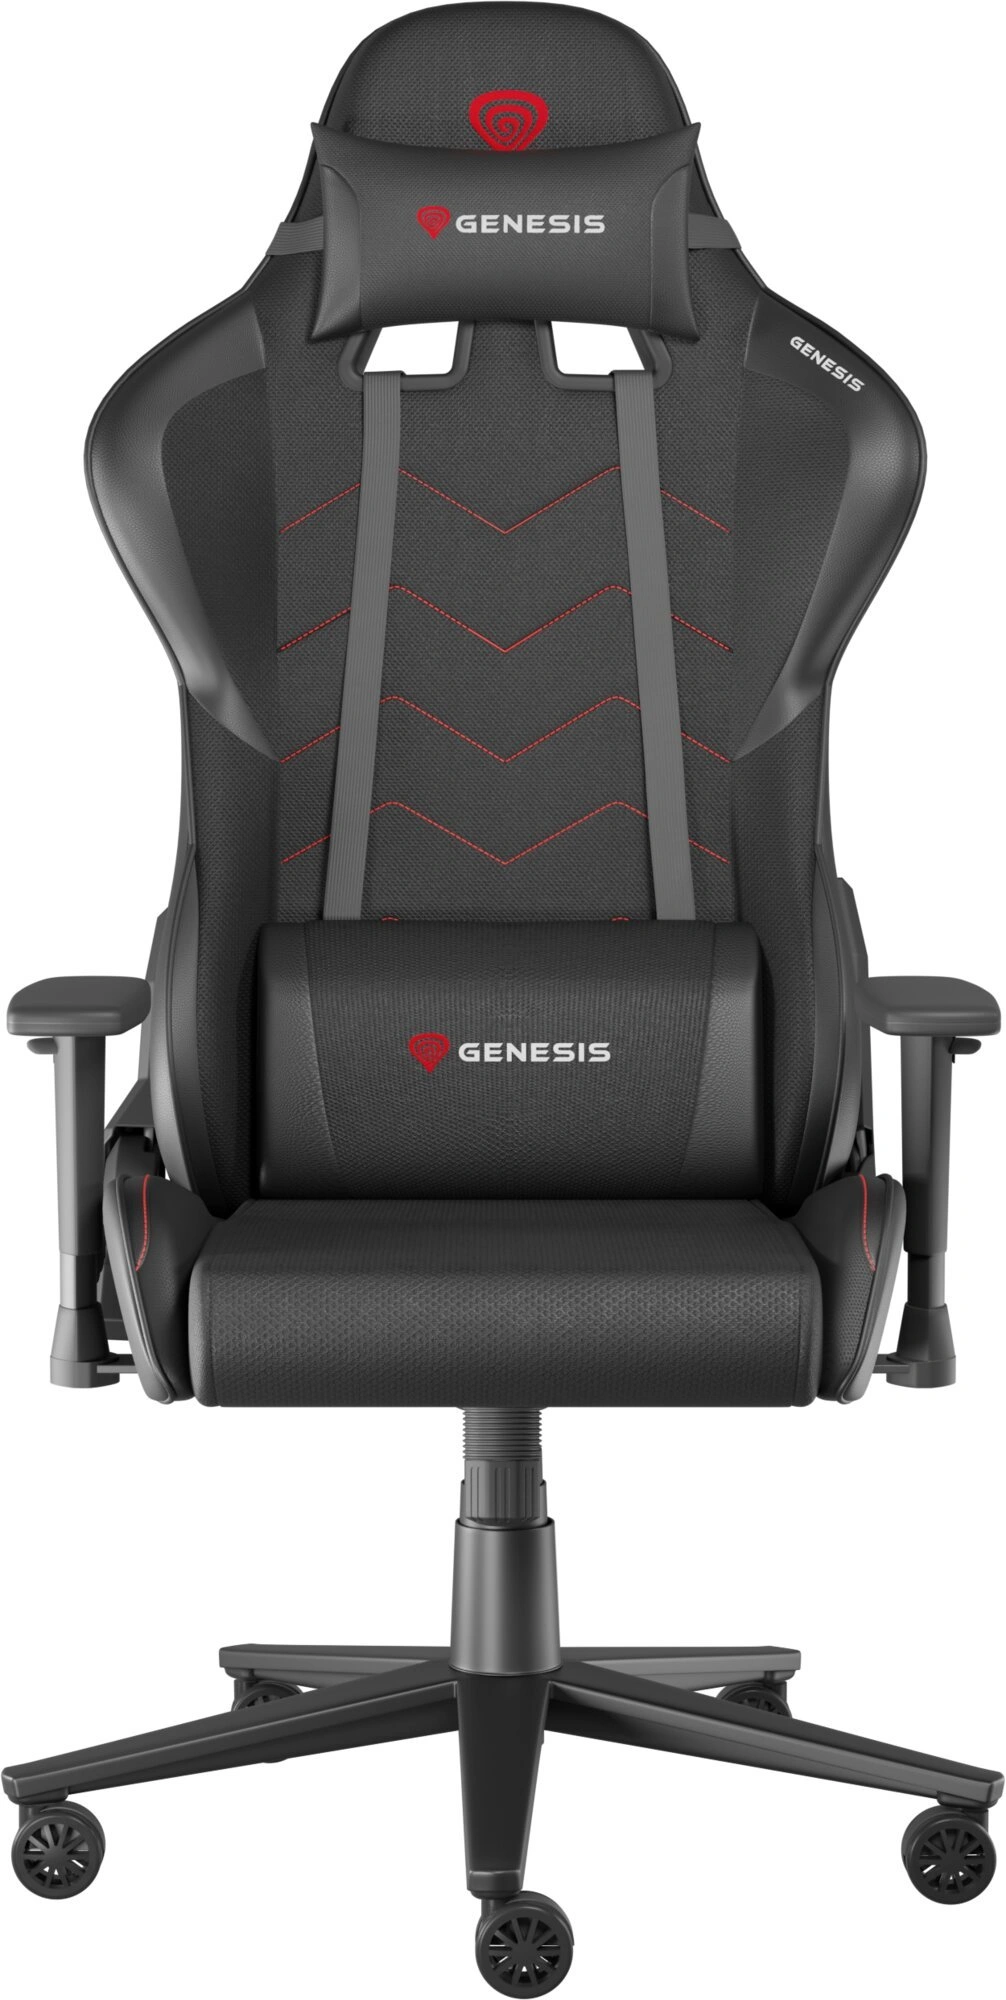 Genesis NITRO 550 G2, Black